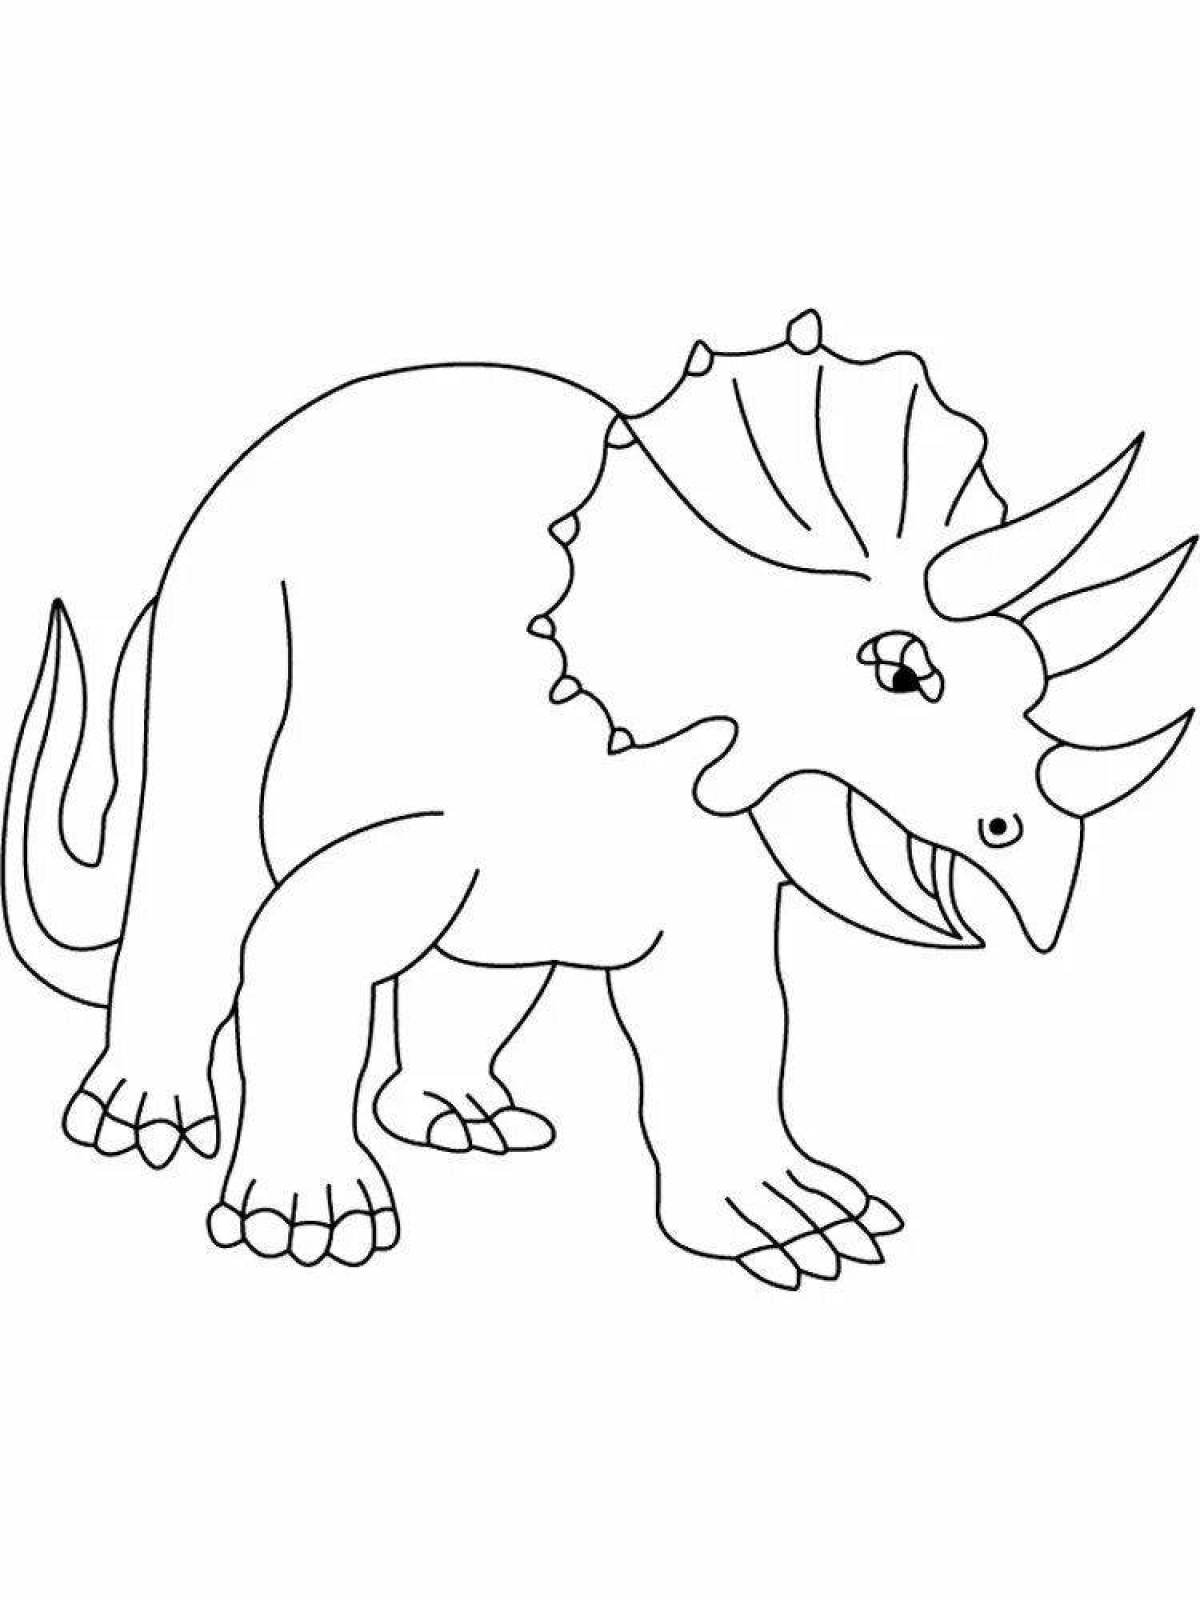 Incredible triceratops coloring book